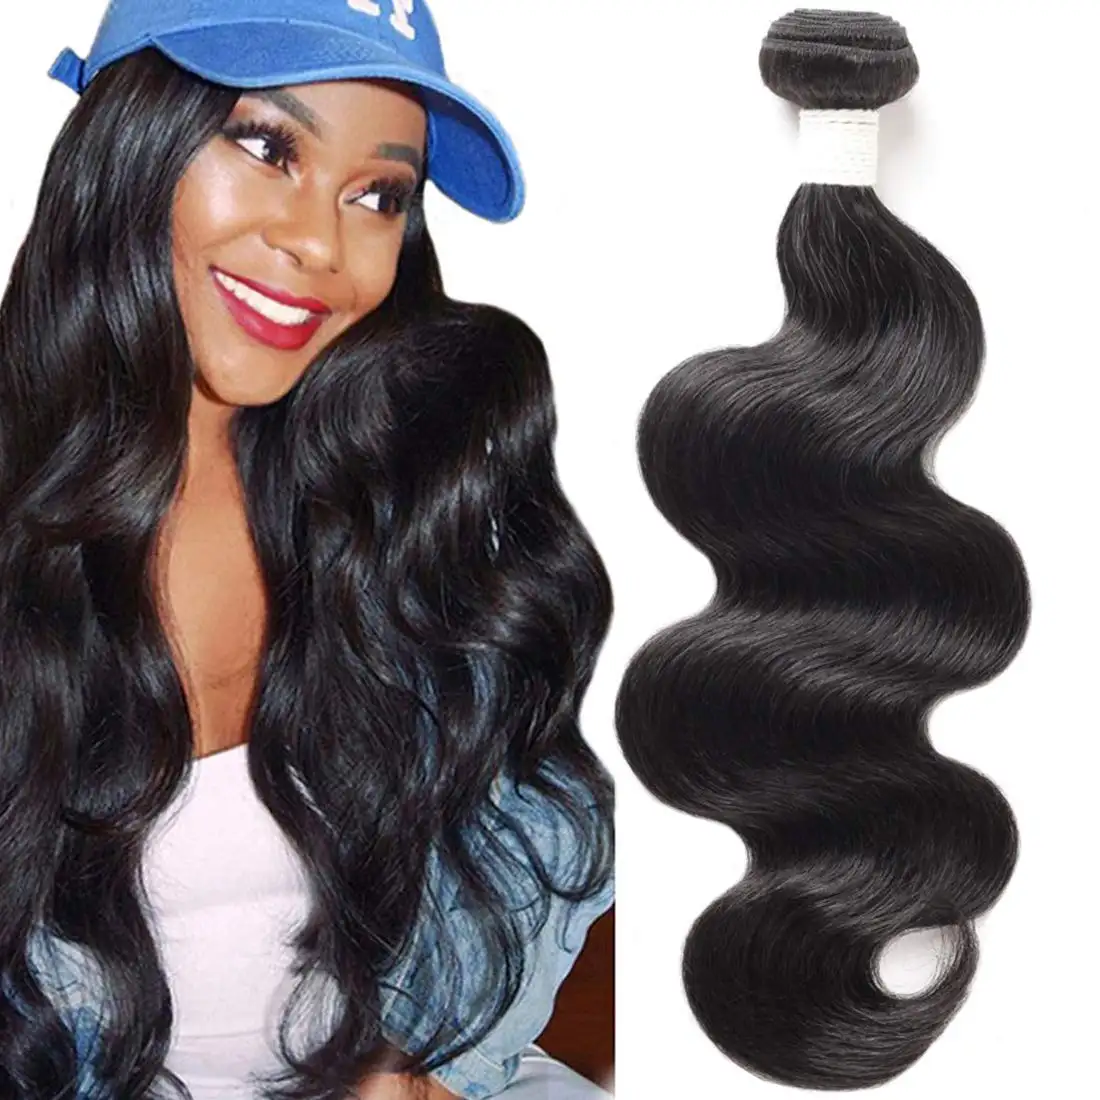 Cheap Natural Black Long Hair 40 inches Body Wave 100% Raw Brazilian Indian Virgin Human Hair Extension Weaving Hair Bundles